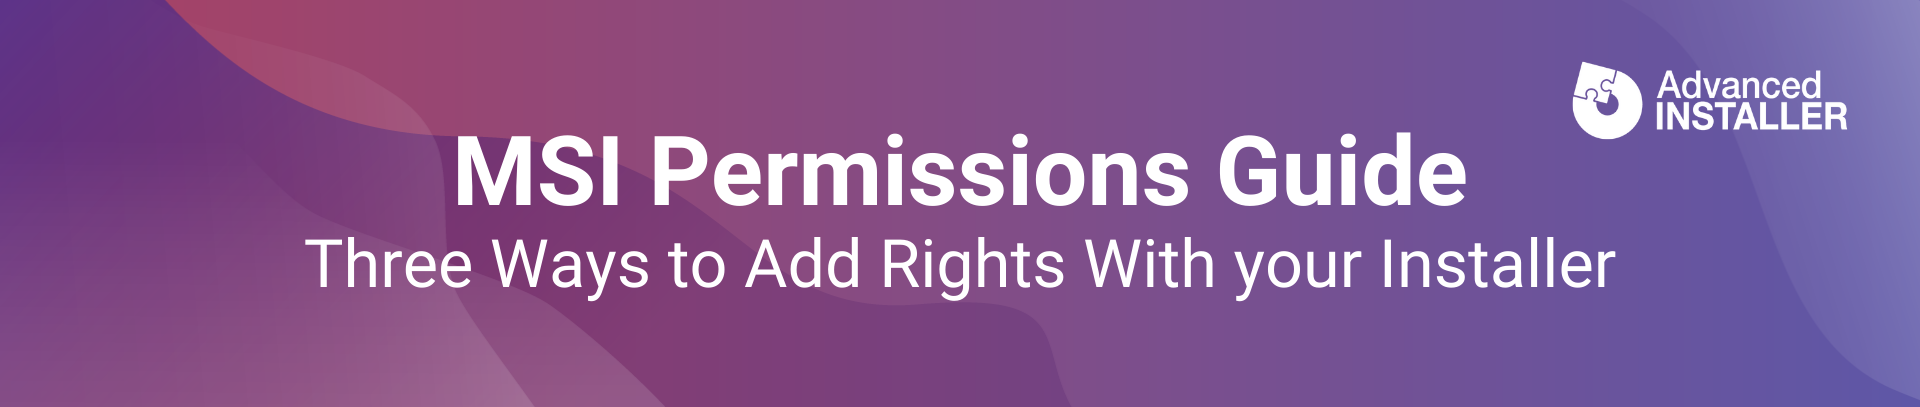 Msi permissions guide